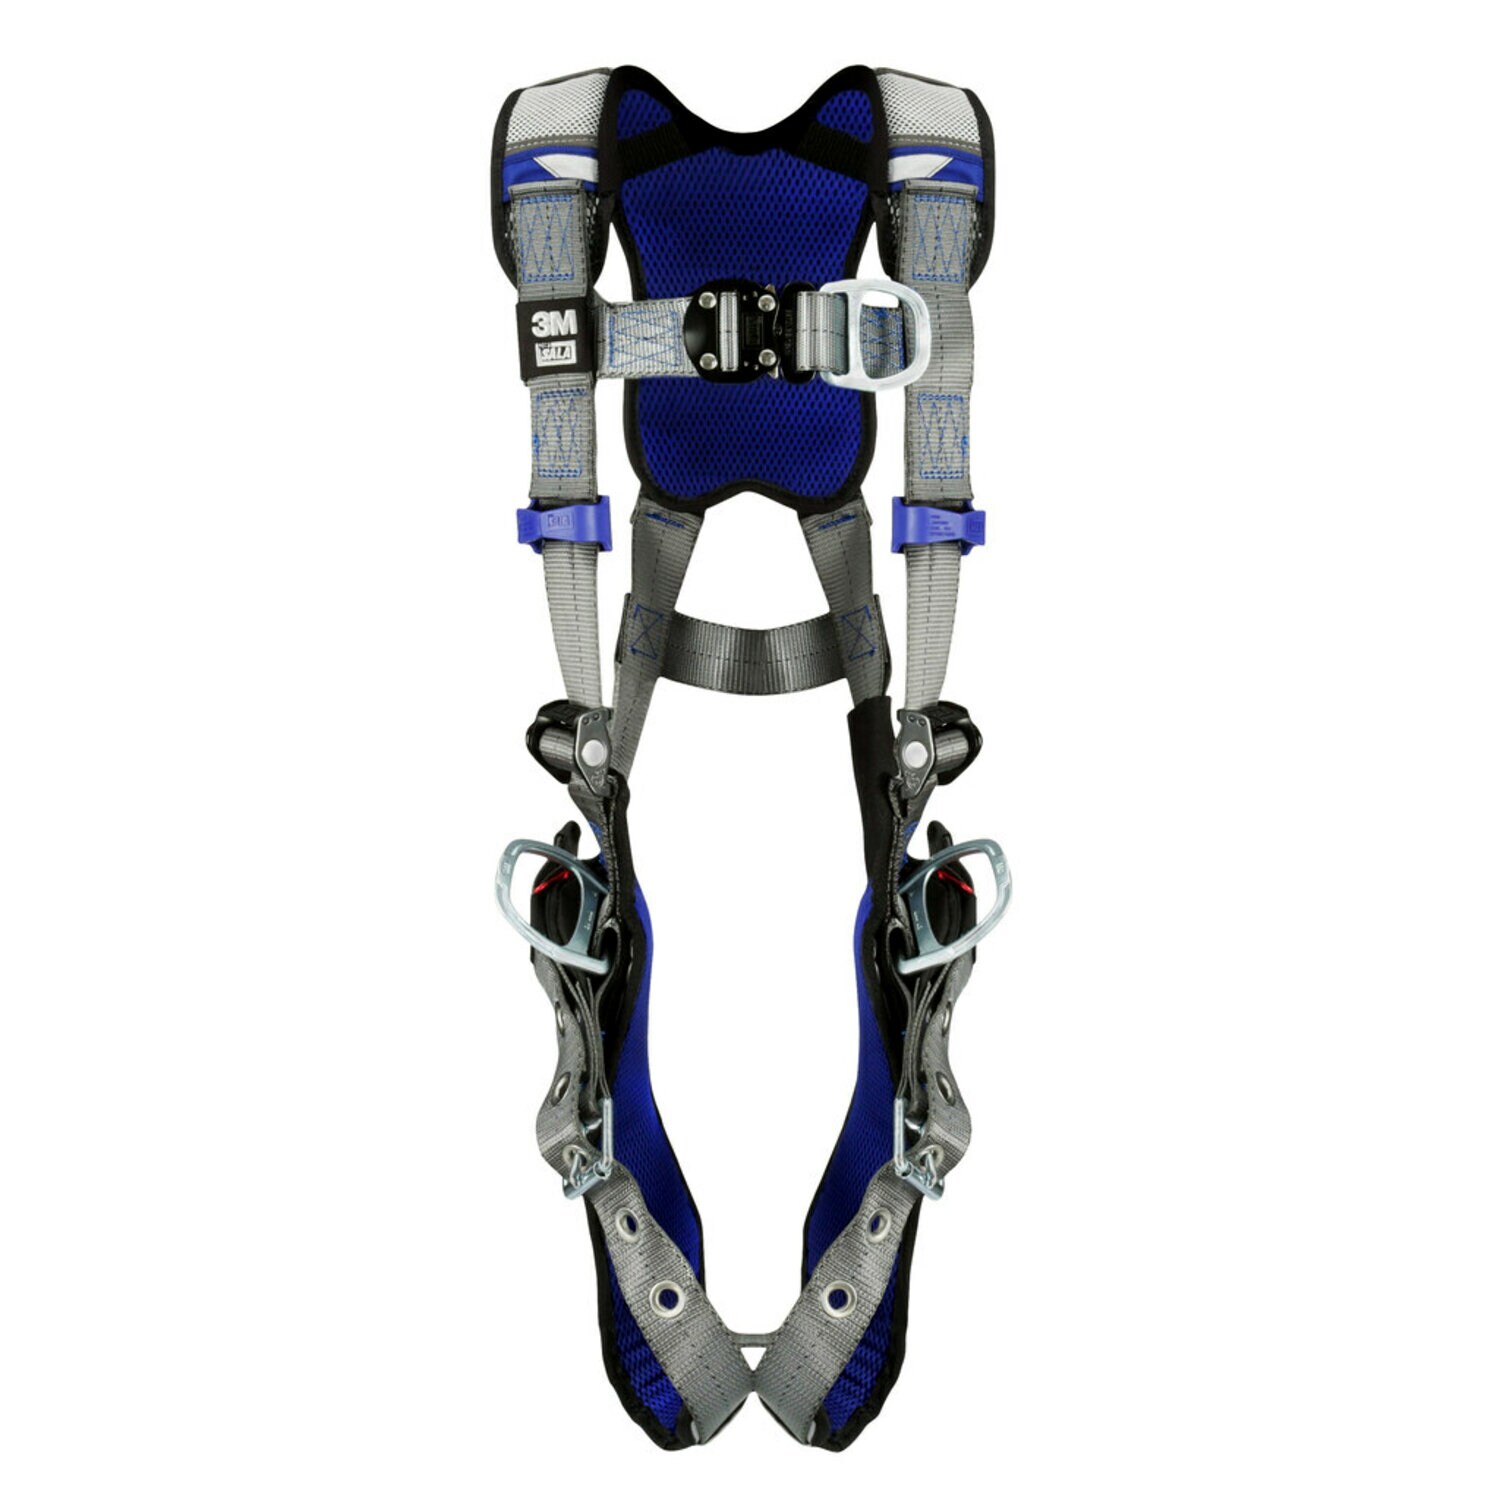 7012817751 - 3M DBI-SALA ExoFit X200 Comfort Vest Climbing/Positioning Safety Harness 1402019, 2X